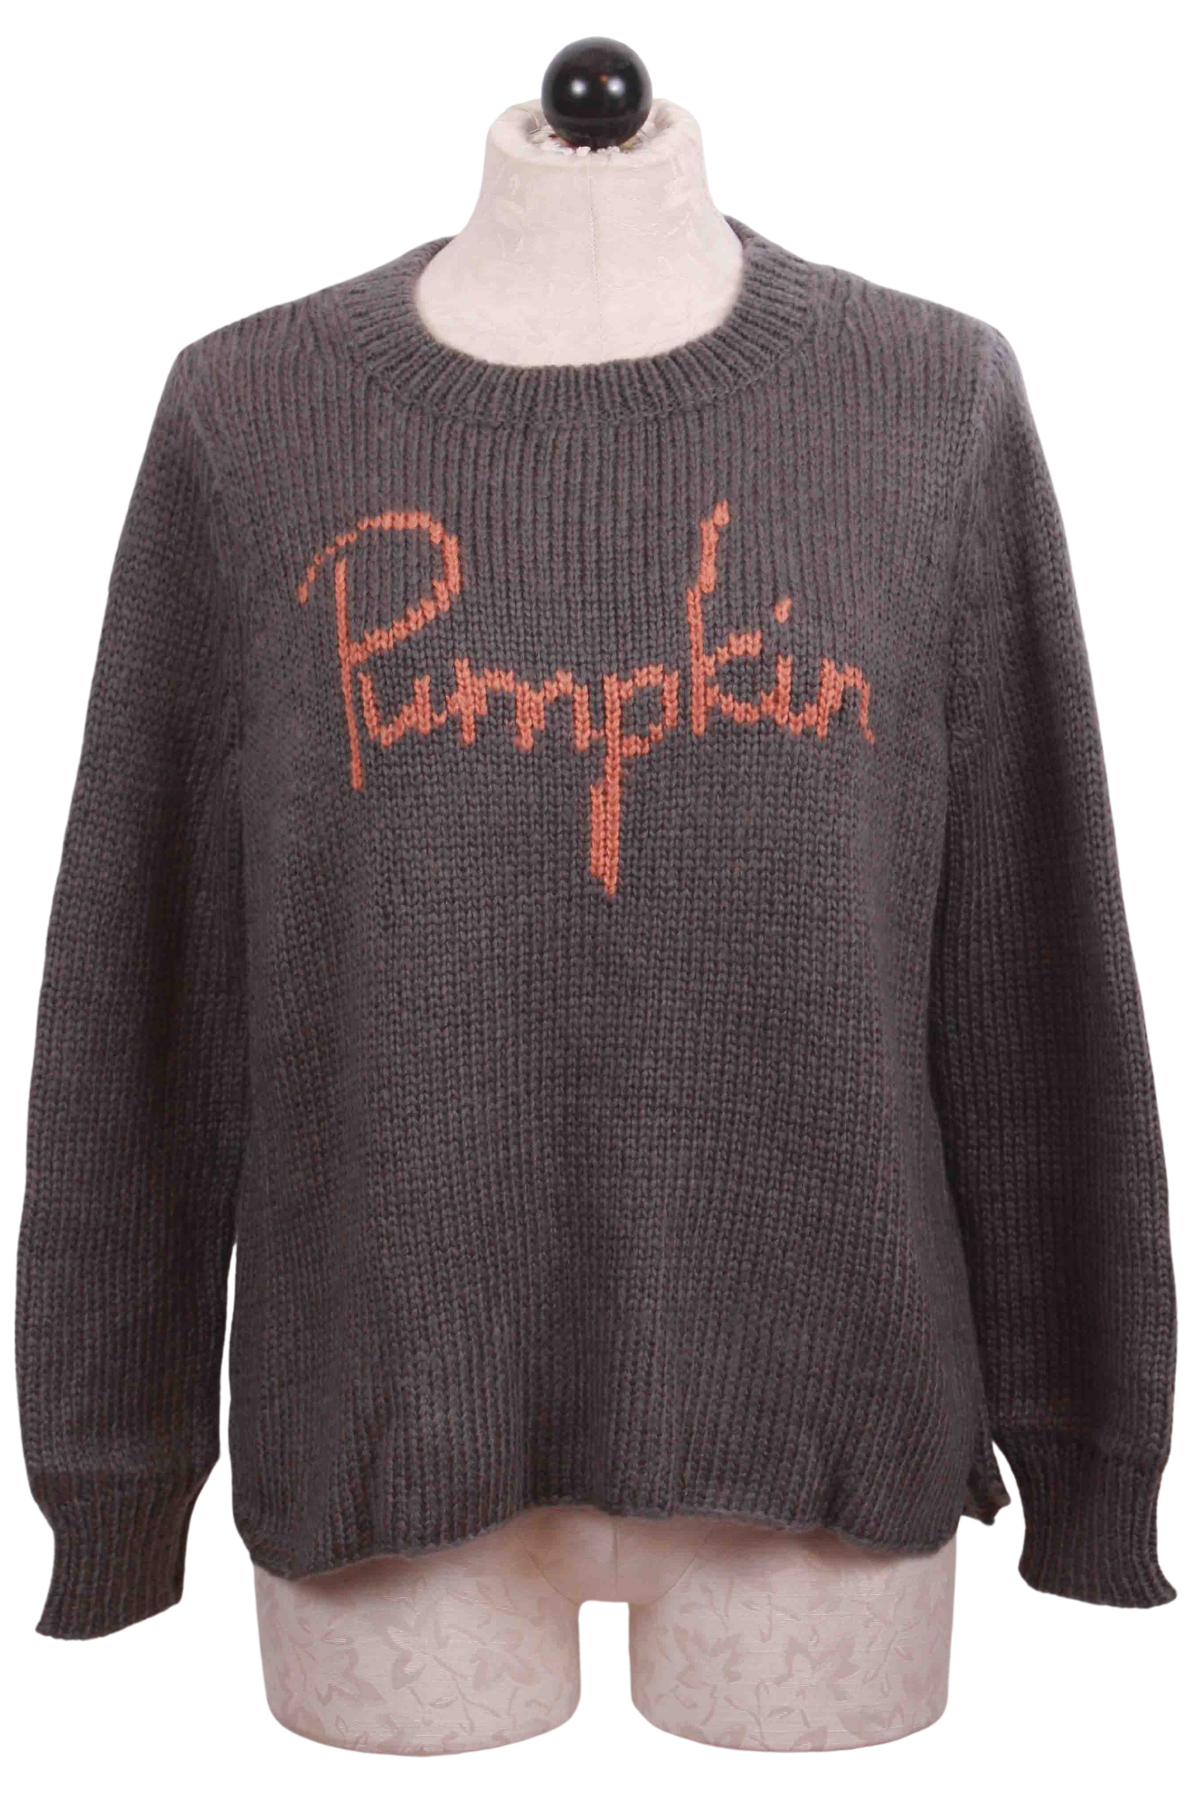 Gunmetal/Georgia Peach colored Pumpkin Crewneck Sweater by Wooden Ships